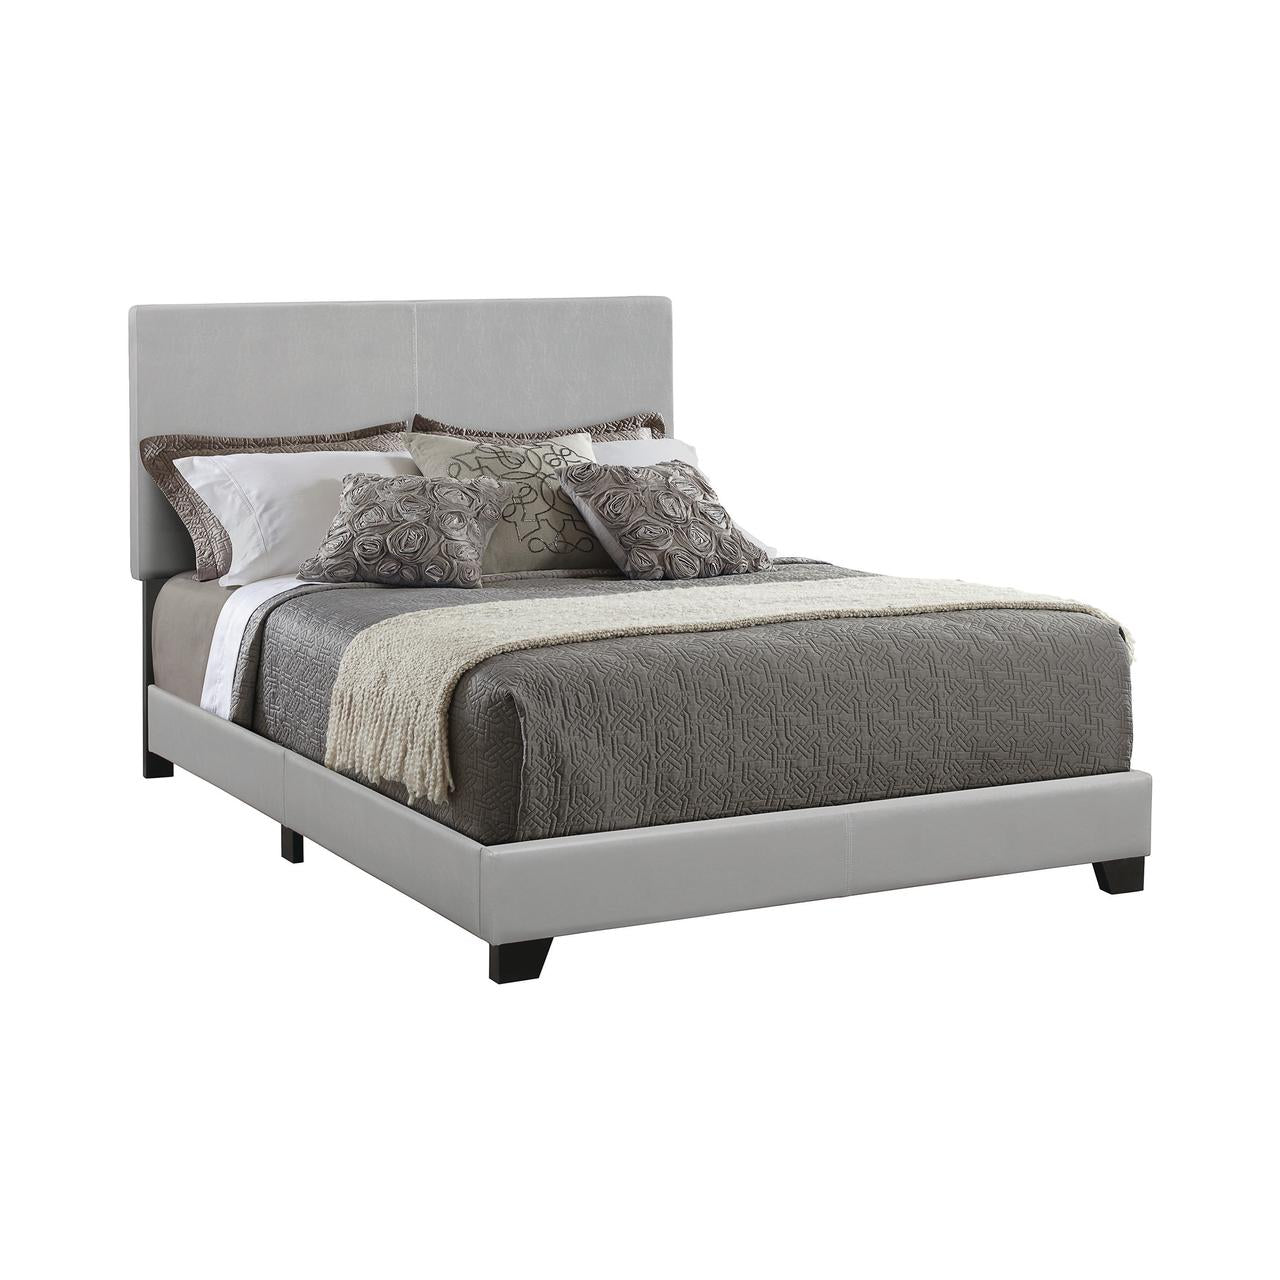 Dorian Upholstered Bed, #6822